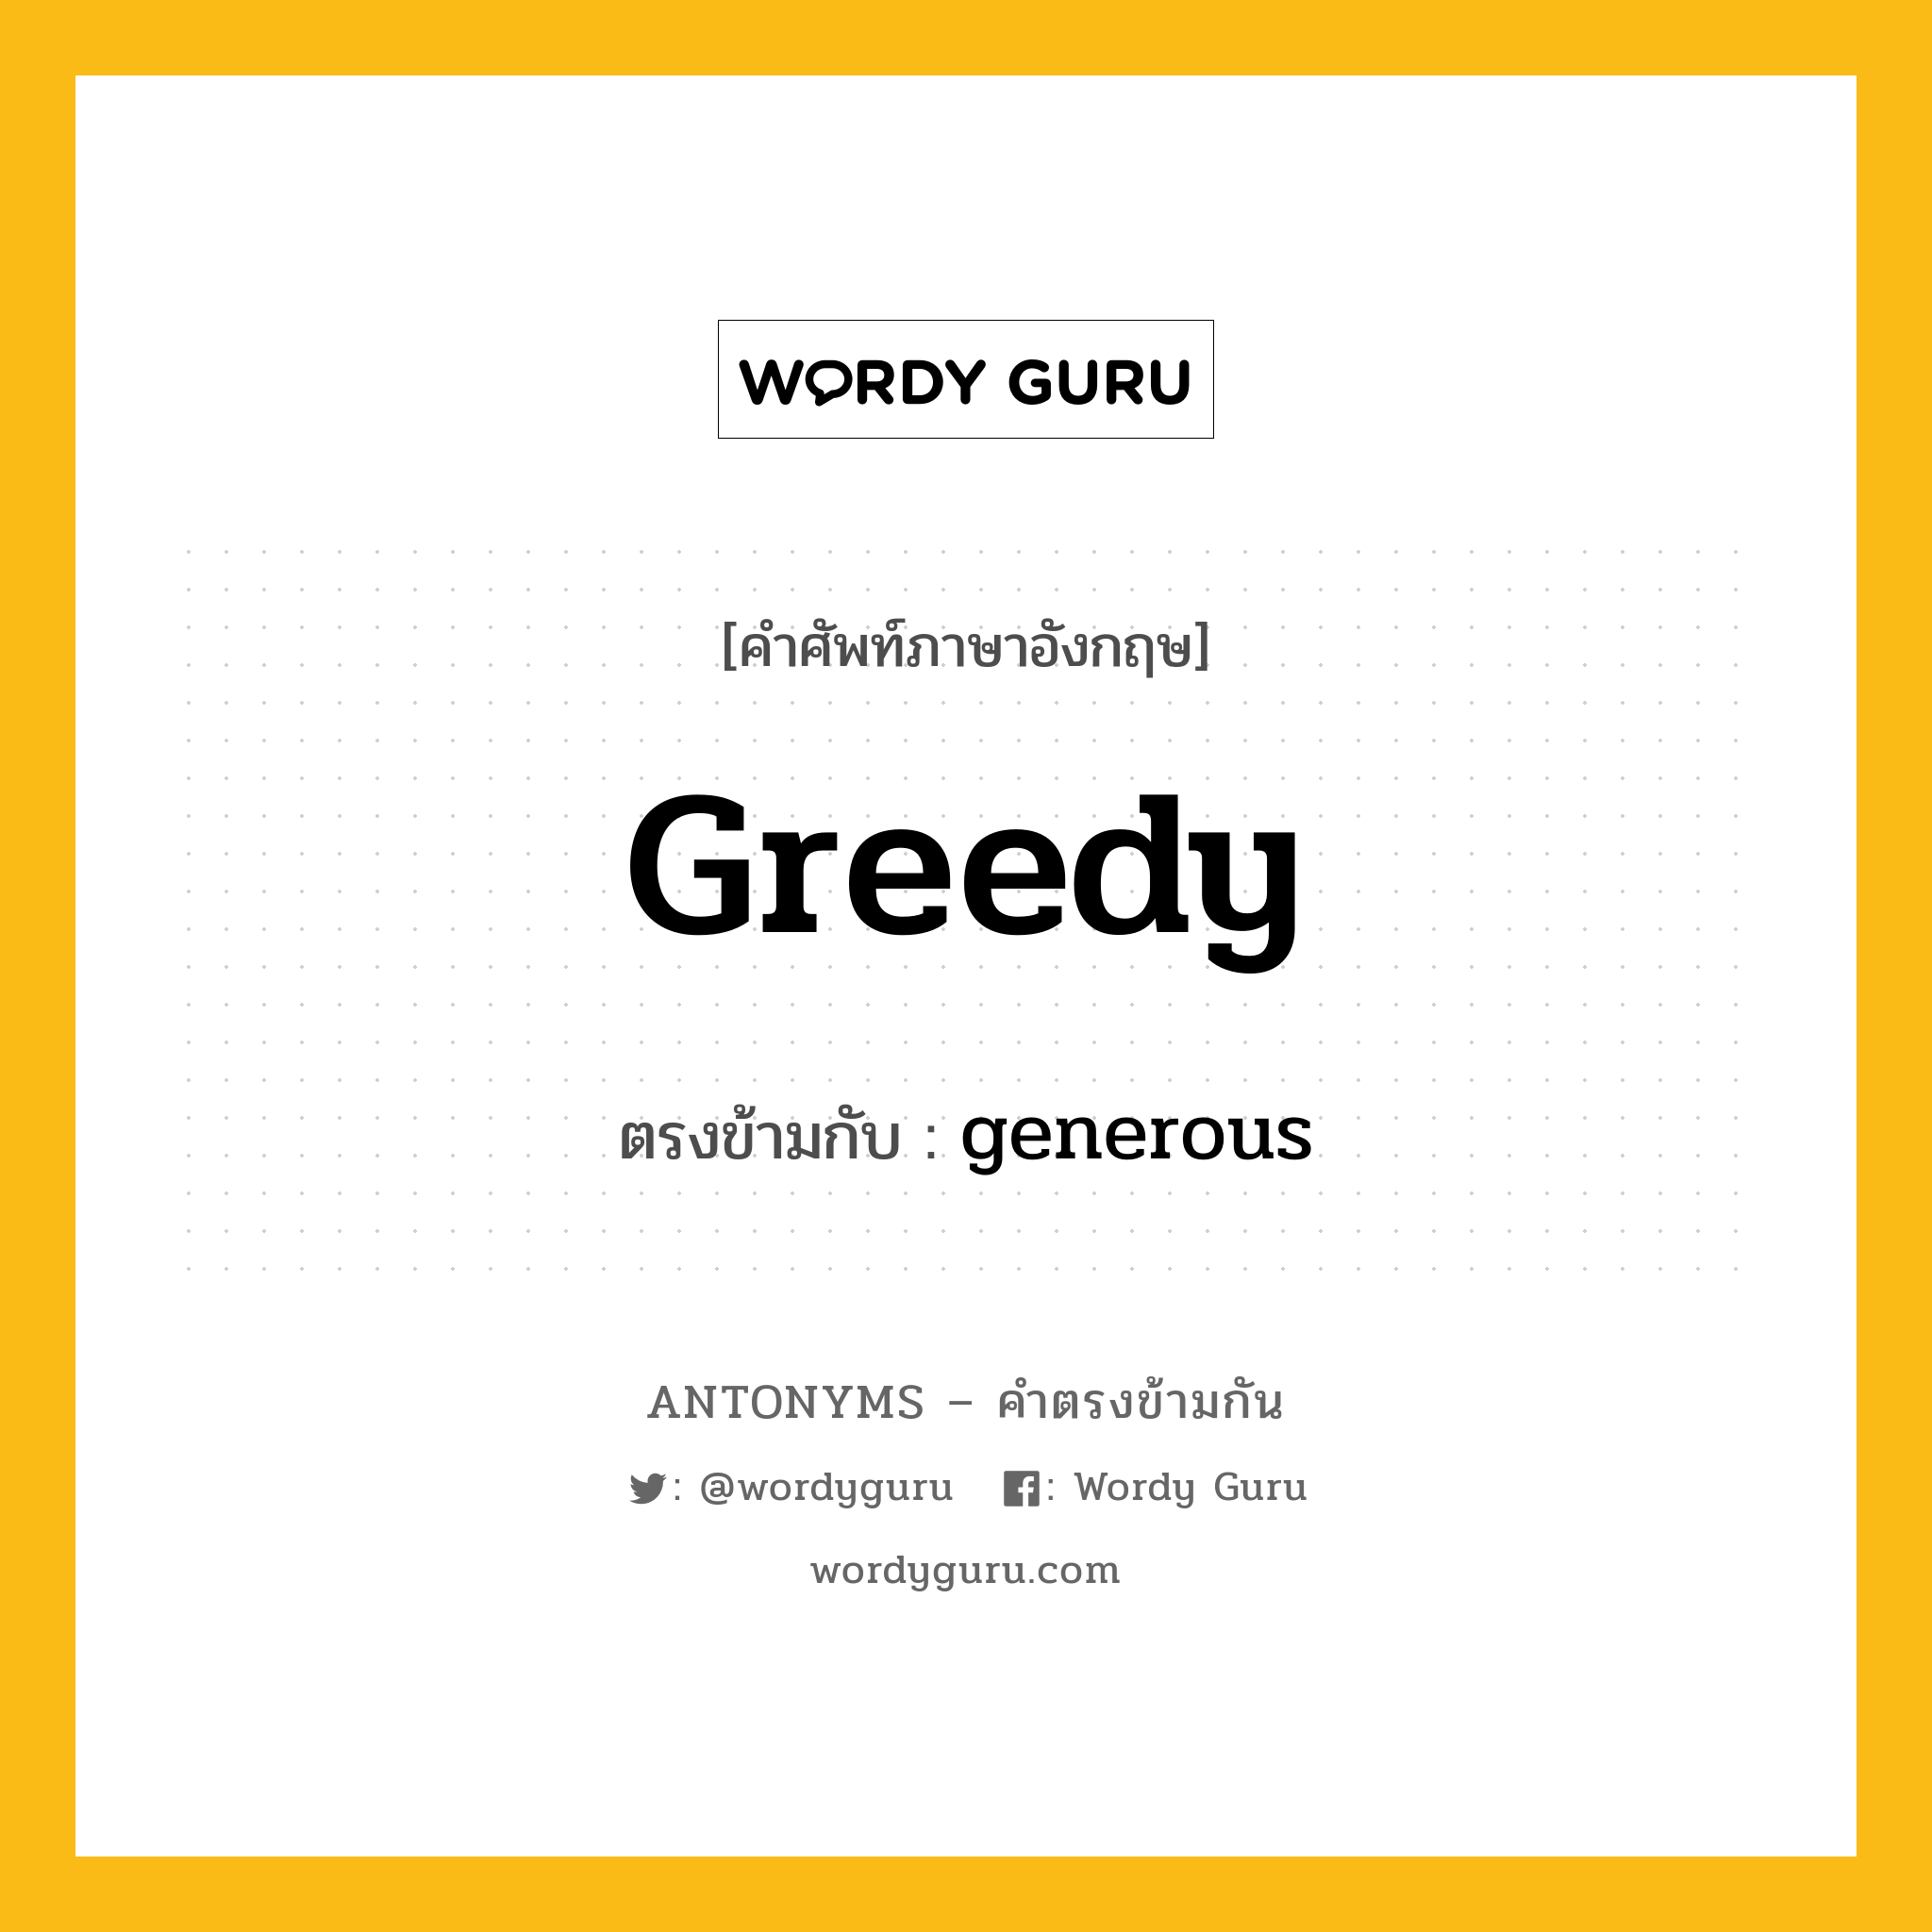 greedy เป็นคำตรงข้ามกับคำไหนบ้าง?, คำศัพท์ภาษาอังกฤษ greedy ตรงข้ามกับ generous หมวด generous